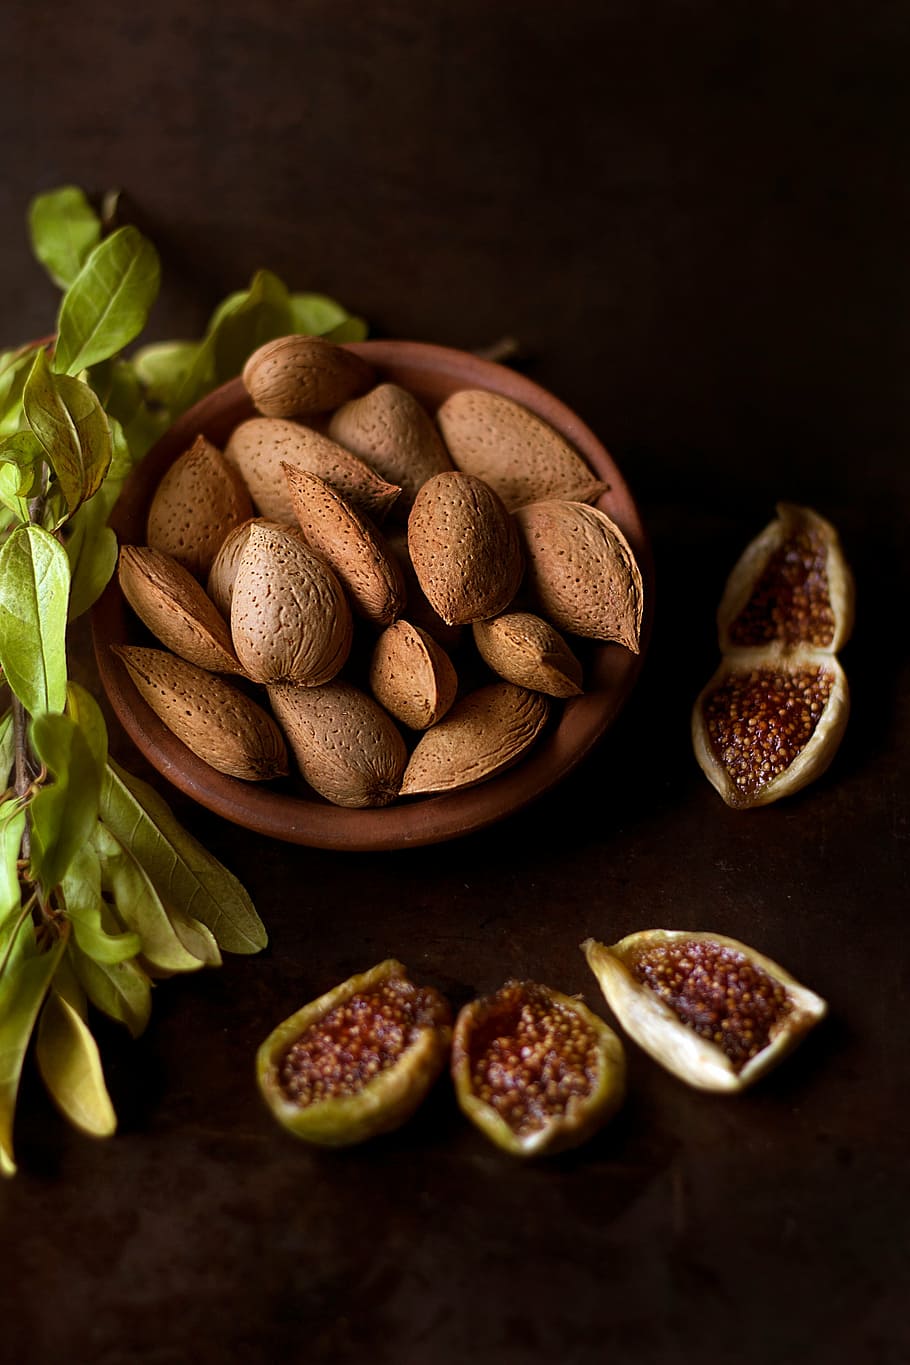 brown almond nuts, brown, hazel, nuts, flower, pot, green, leaves, plant, fruit